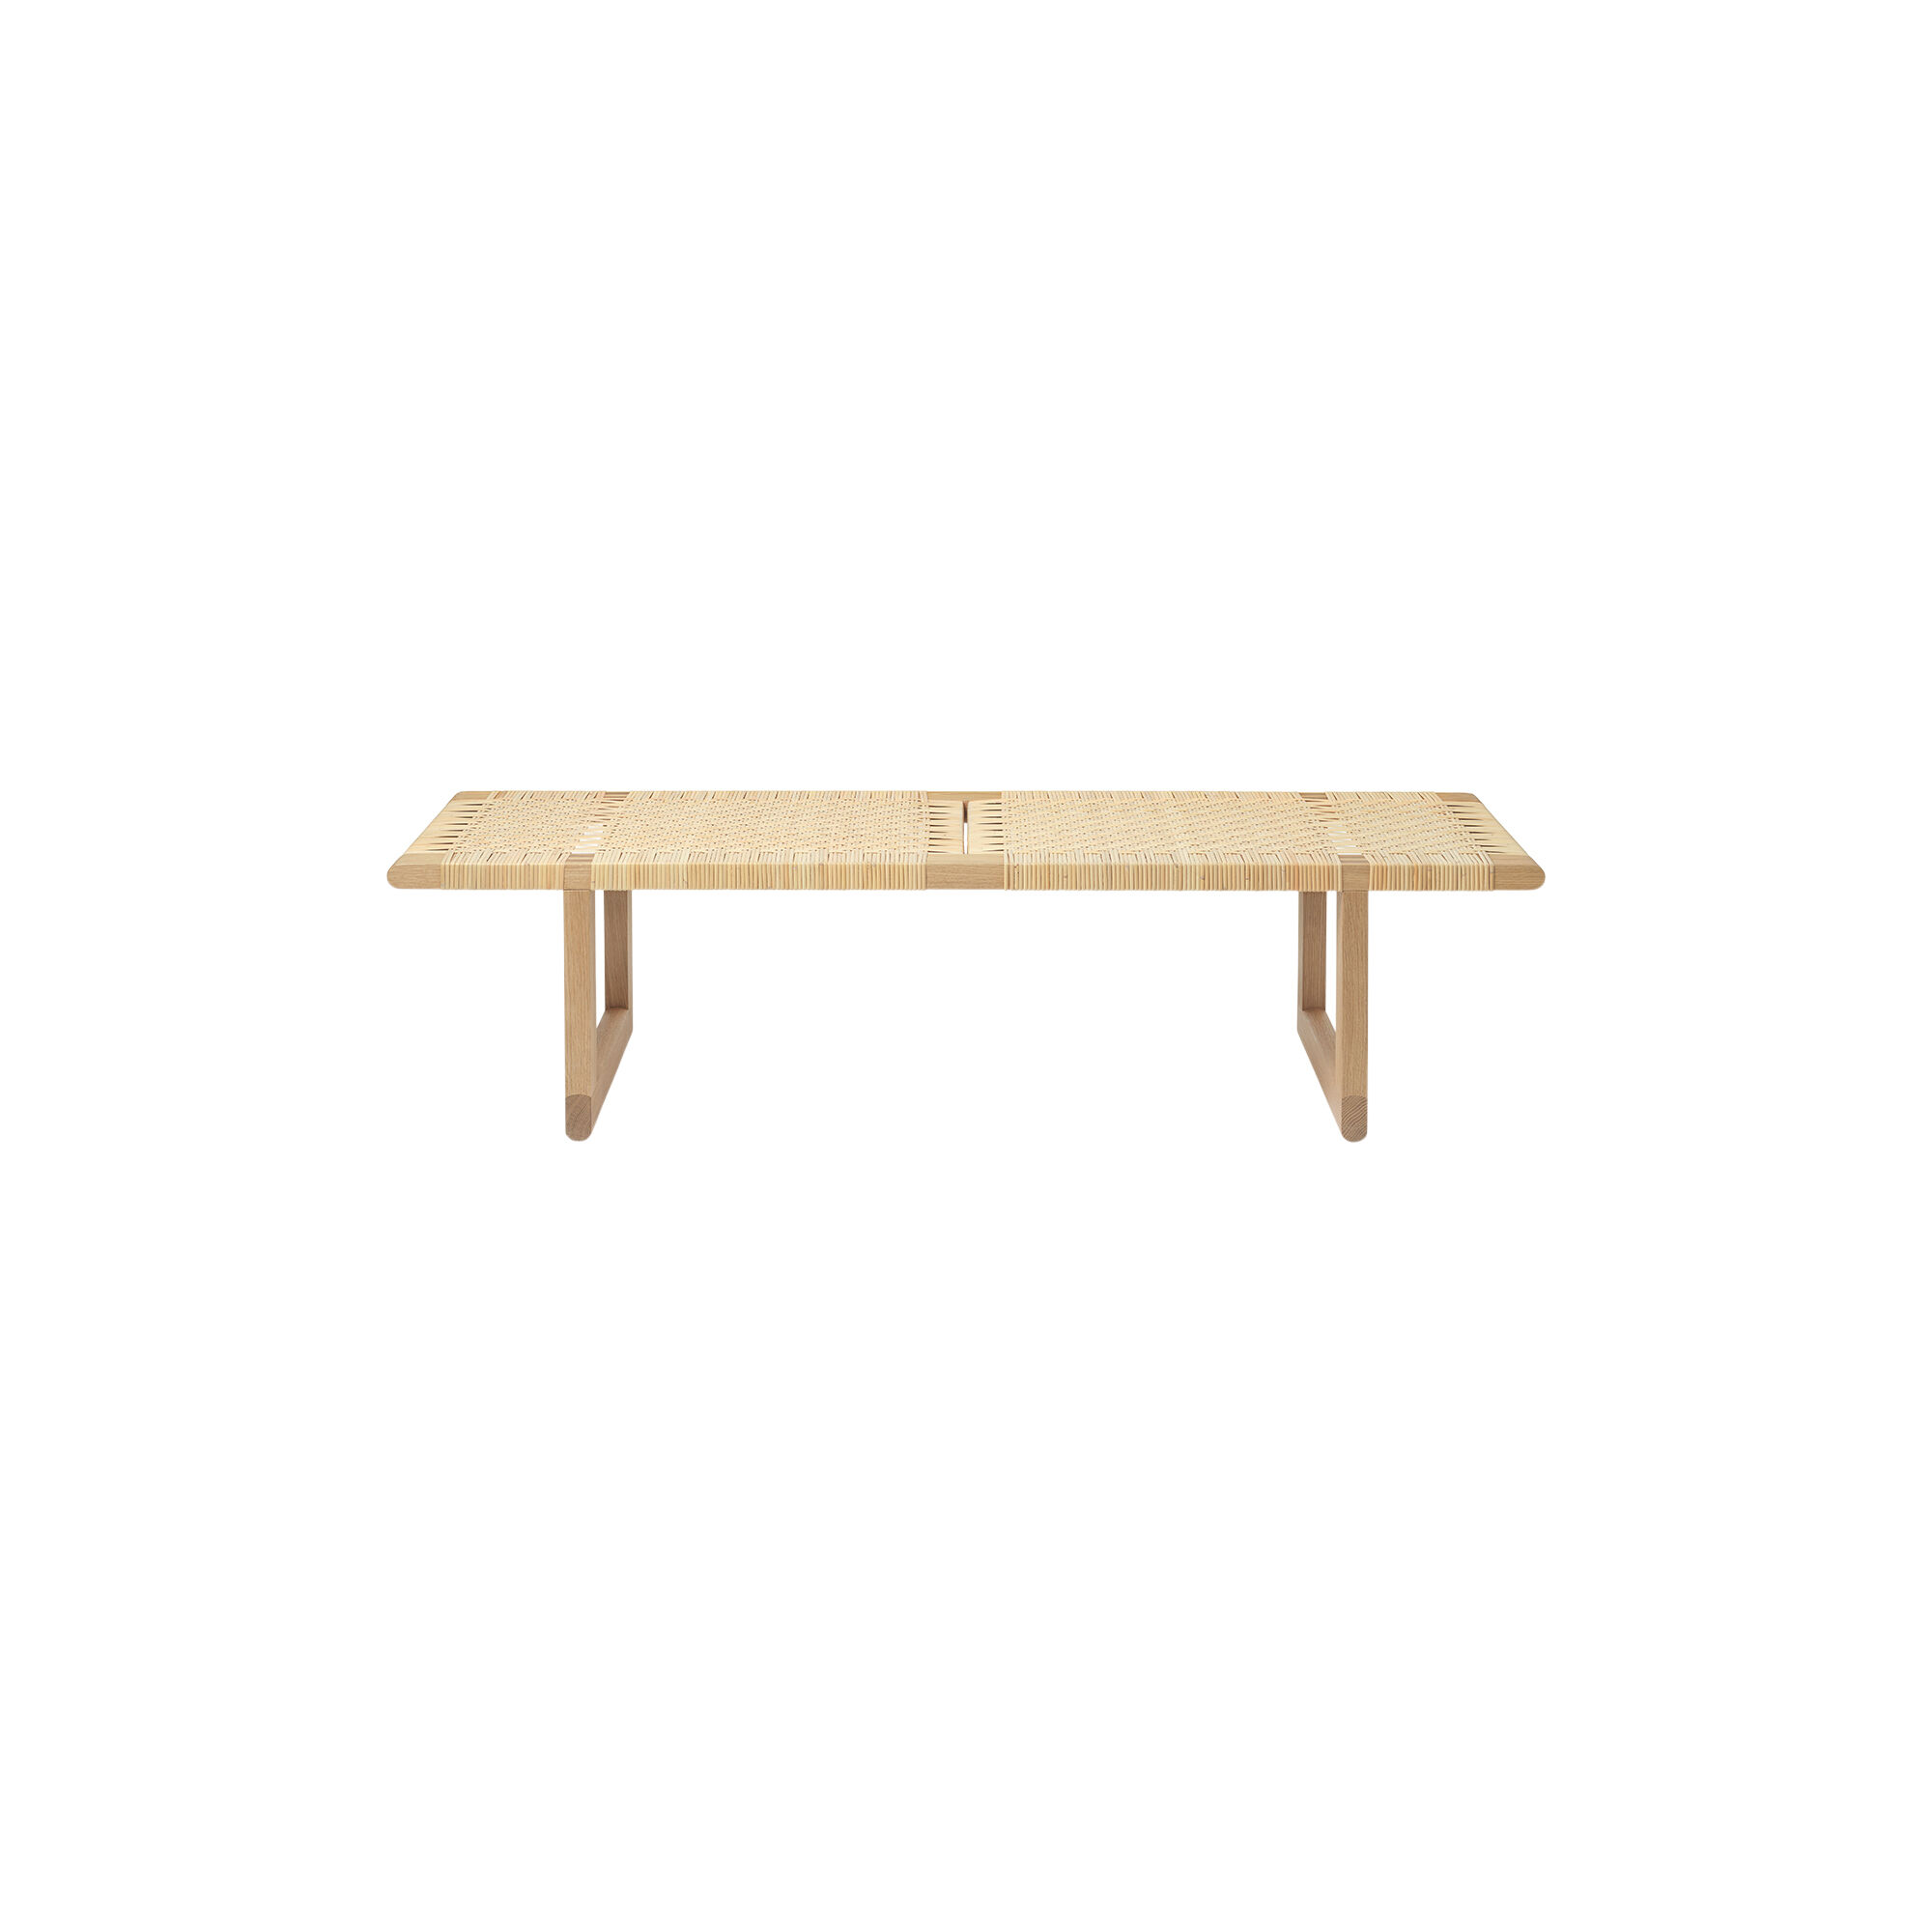 BM0488 Table Bench, oiled oak/natural